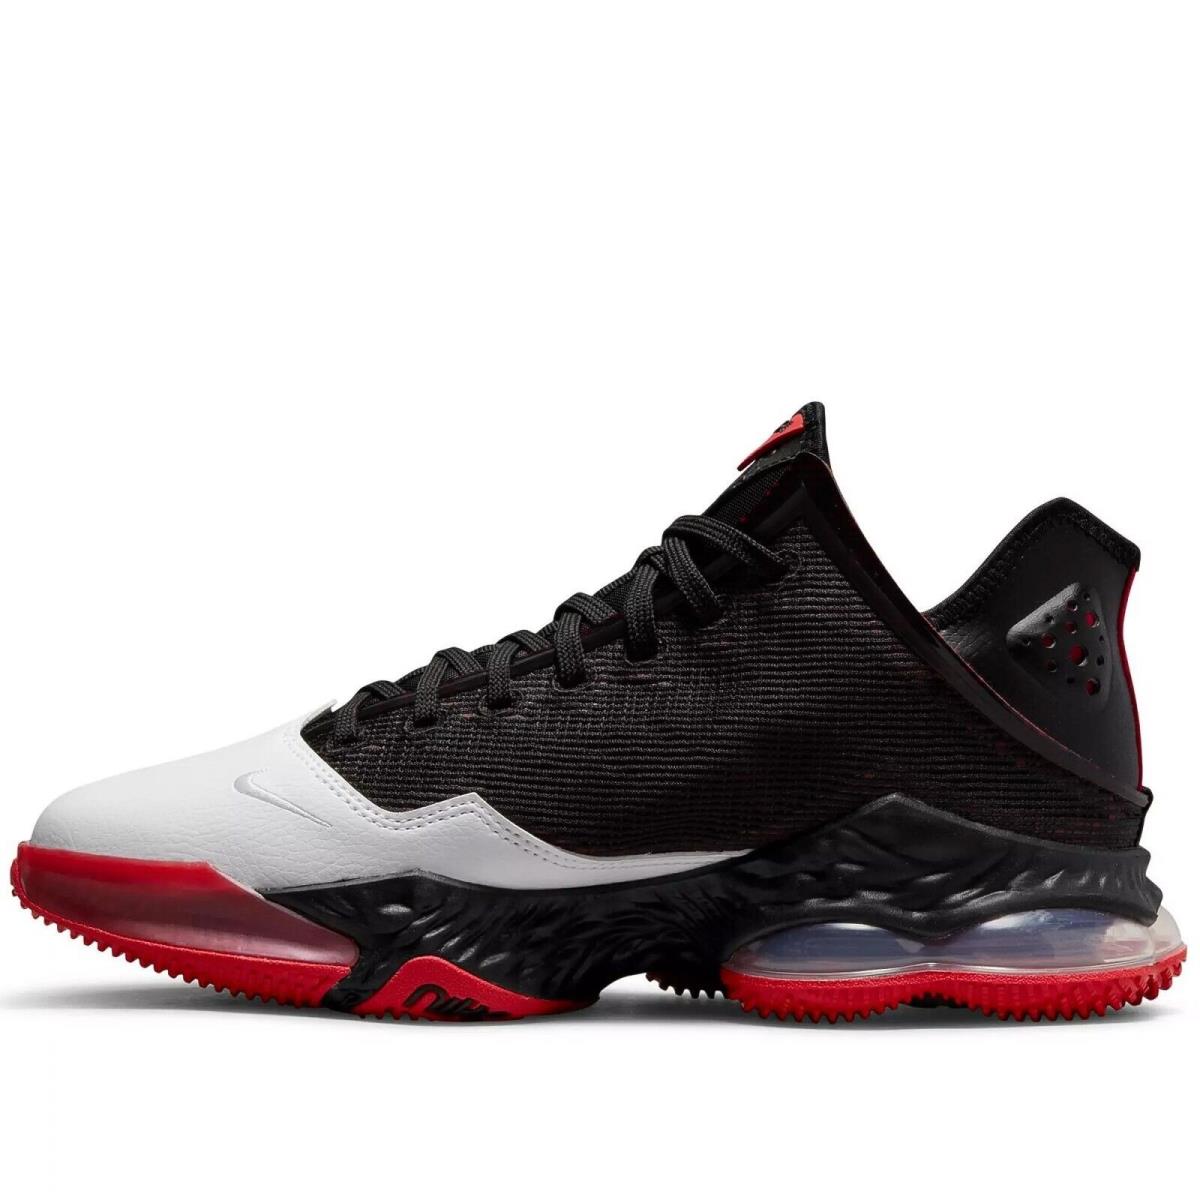 Nike shoes LeBron Low - Black/University Red/White 1